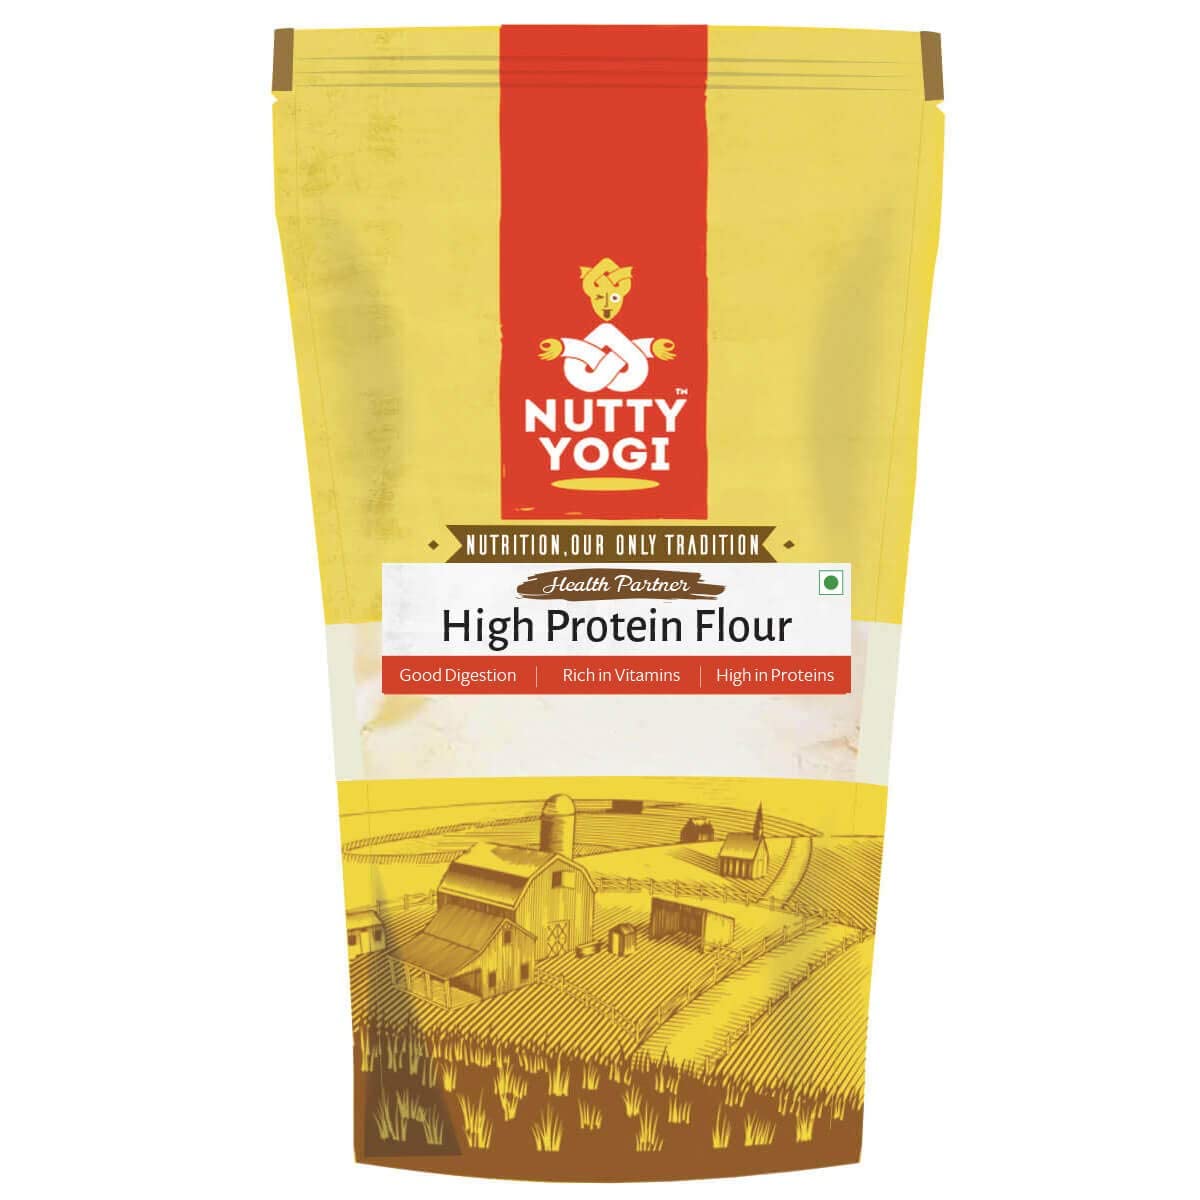 Nutty Yogi High Protein Flour